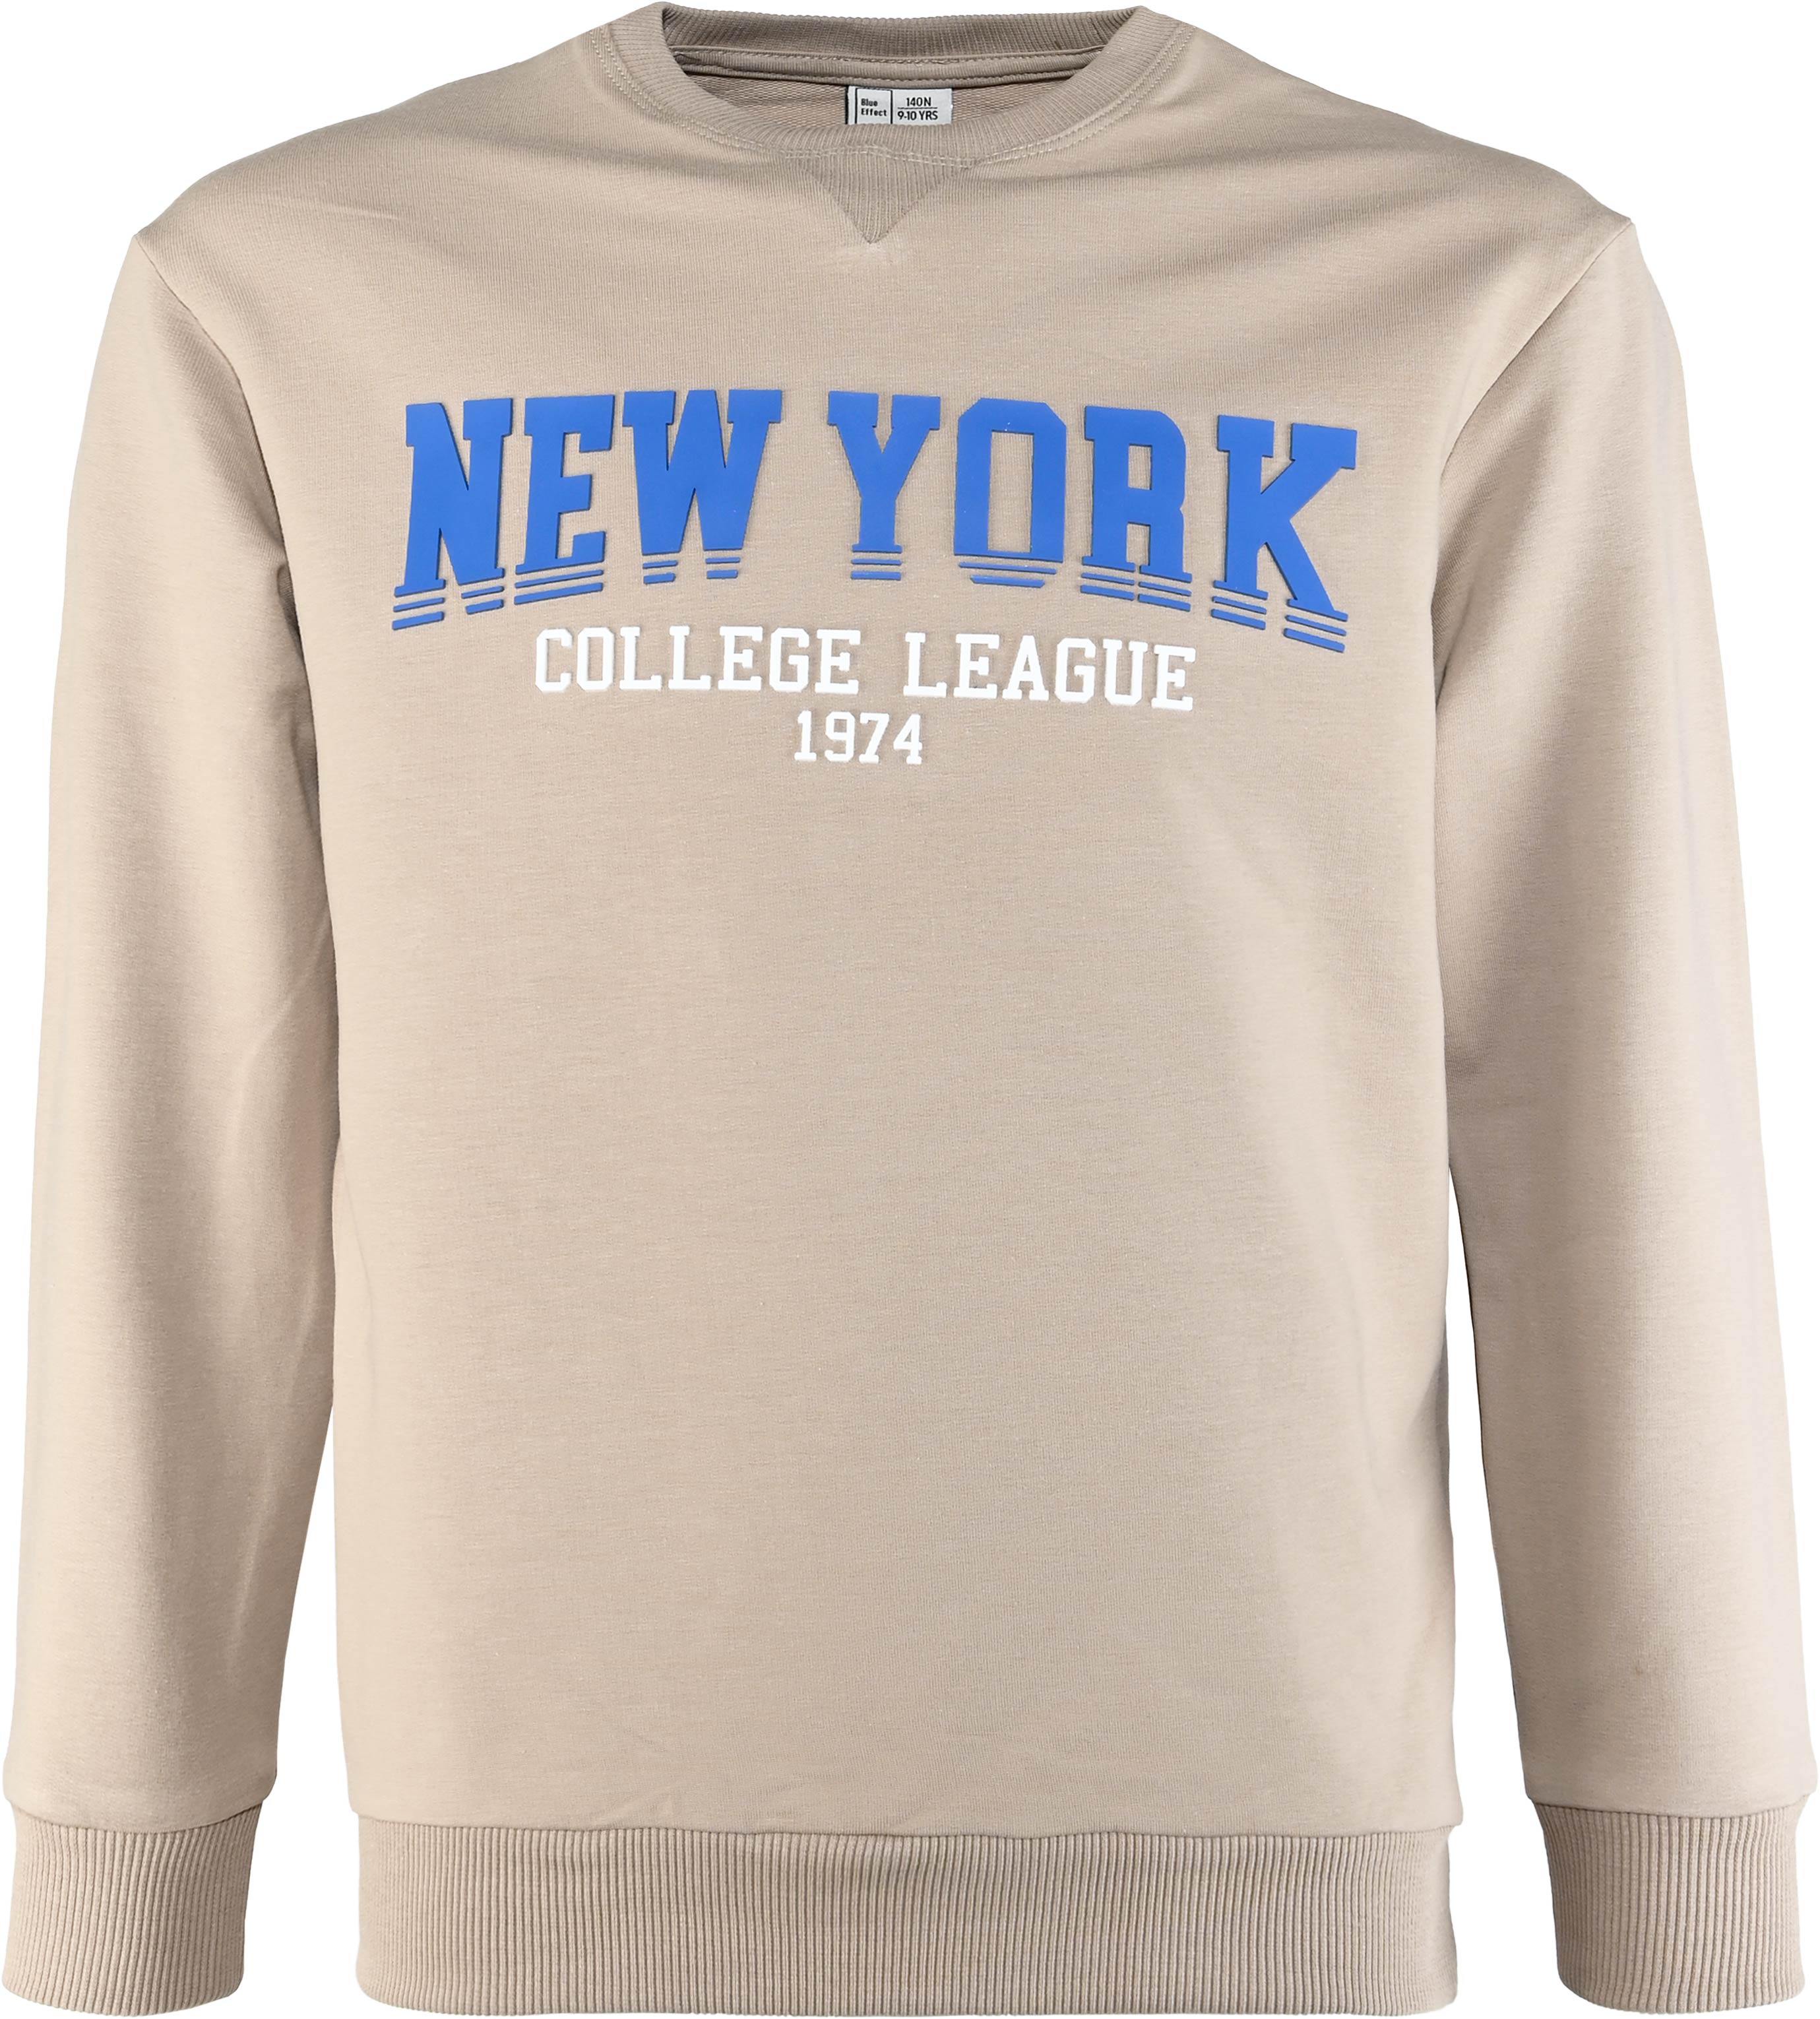 6251-JRNY Boys Sweatshirt -New York